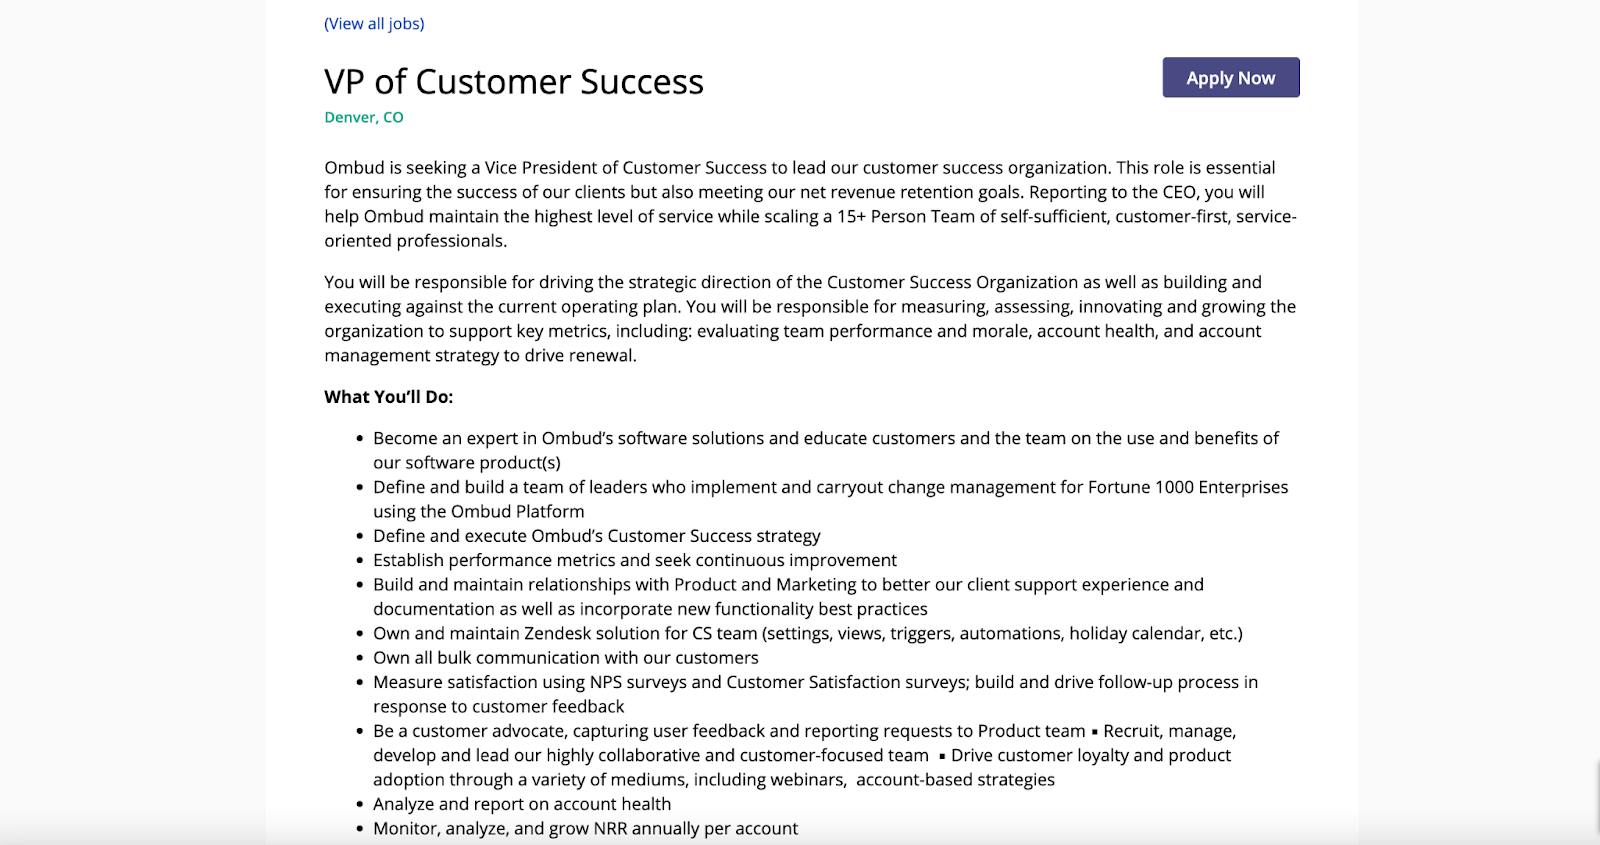 customer success in SaaS, VP of Customer Success job description at Ombud